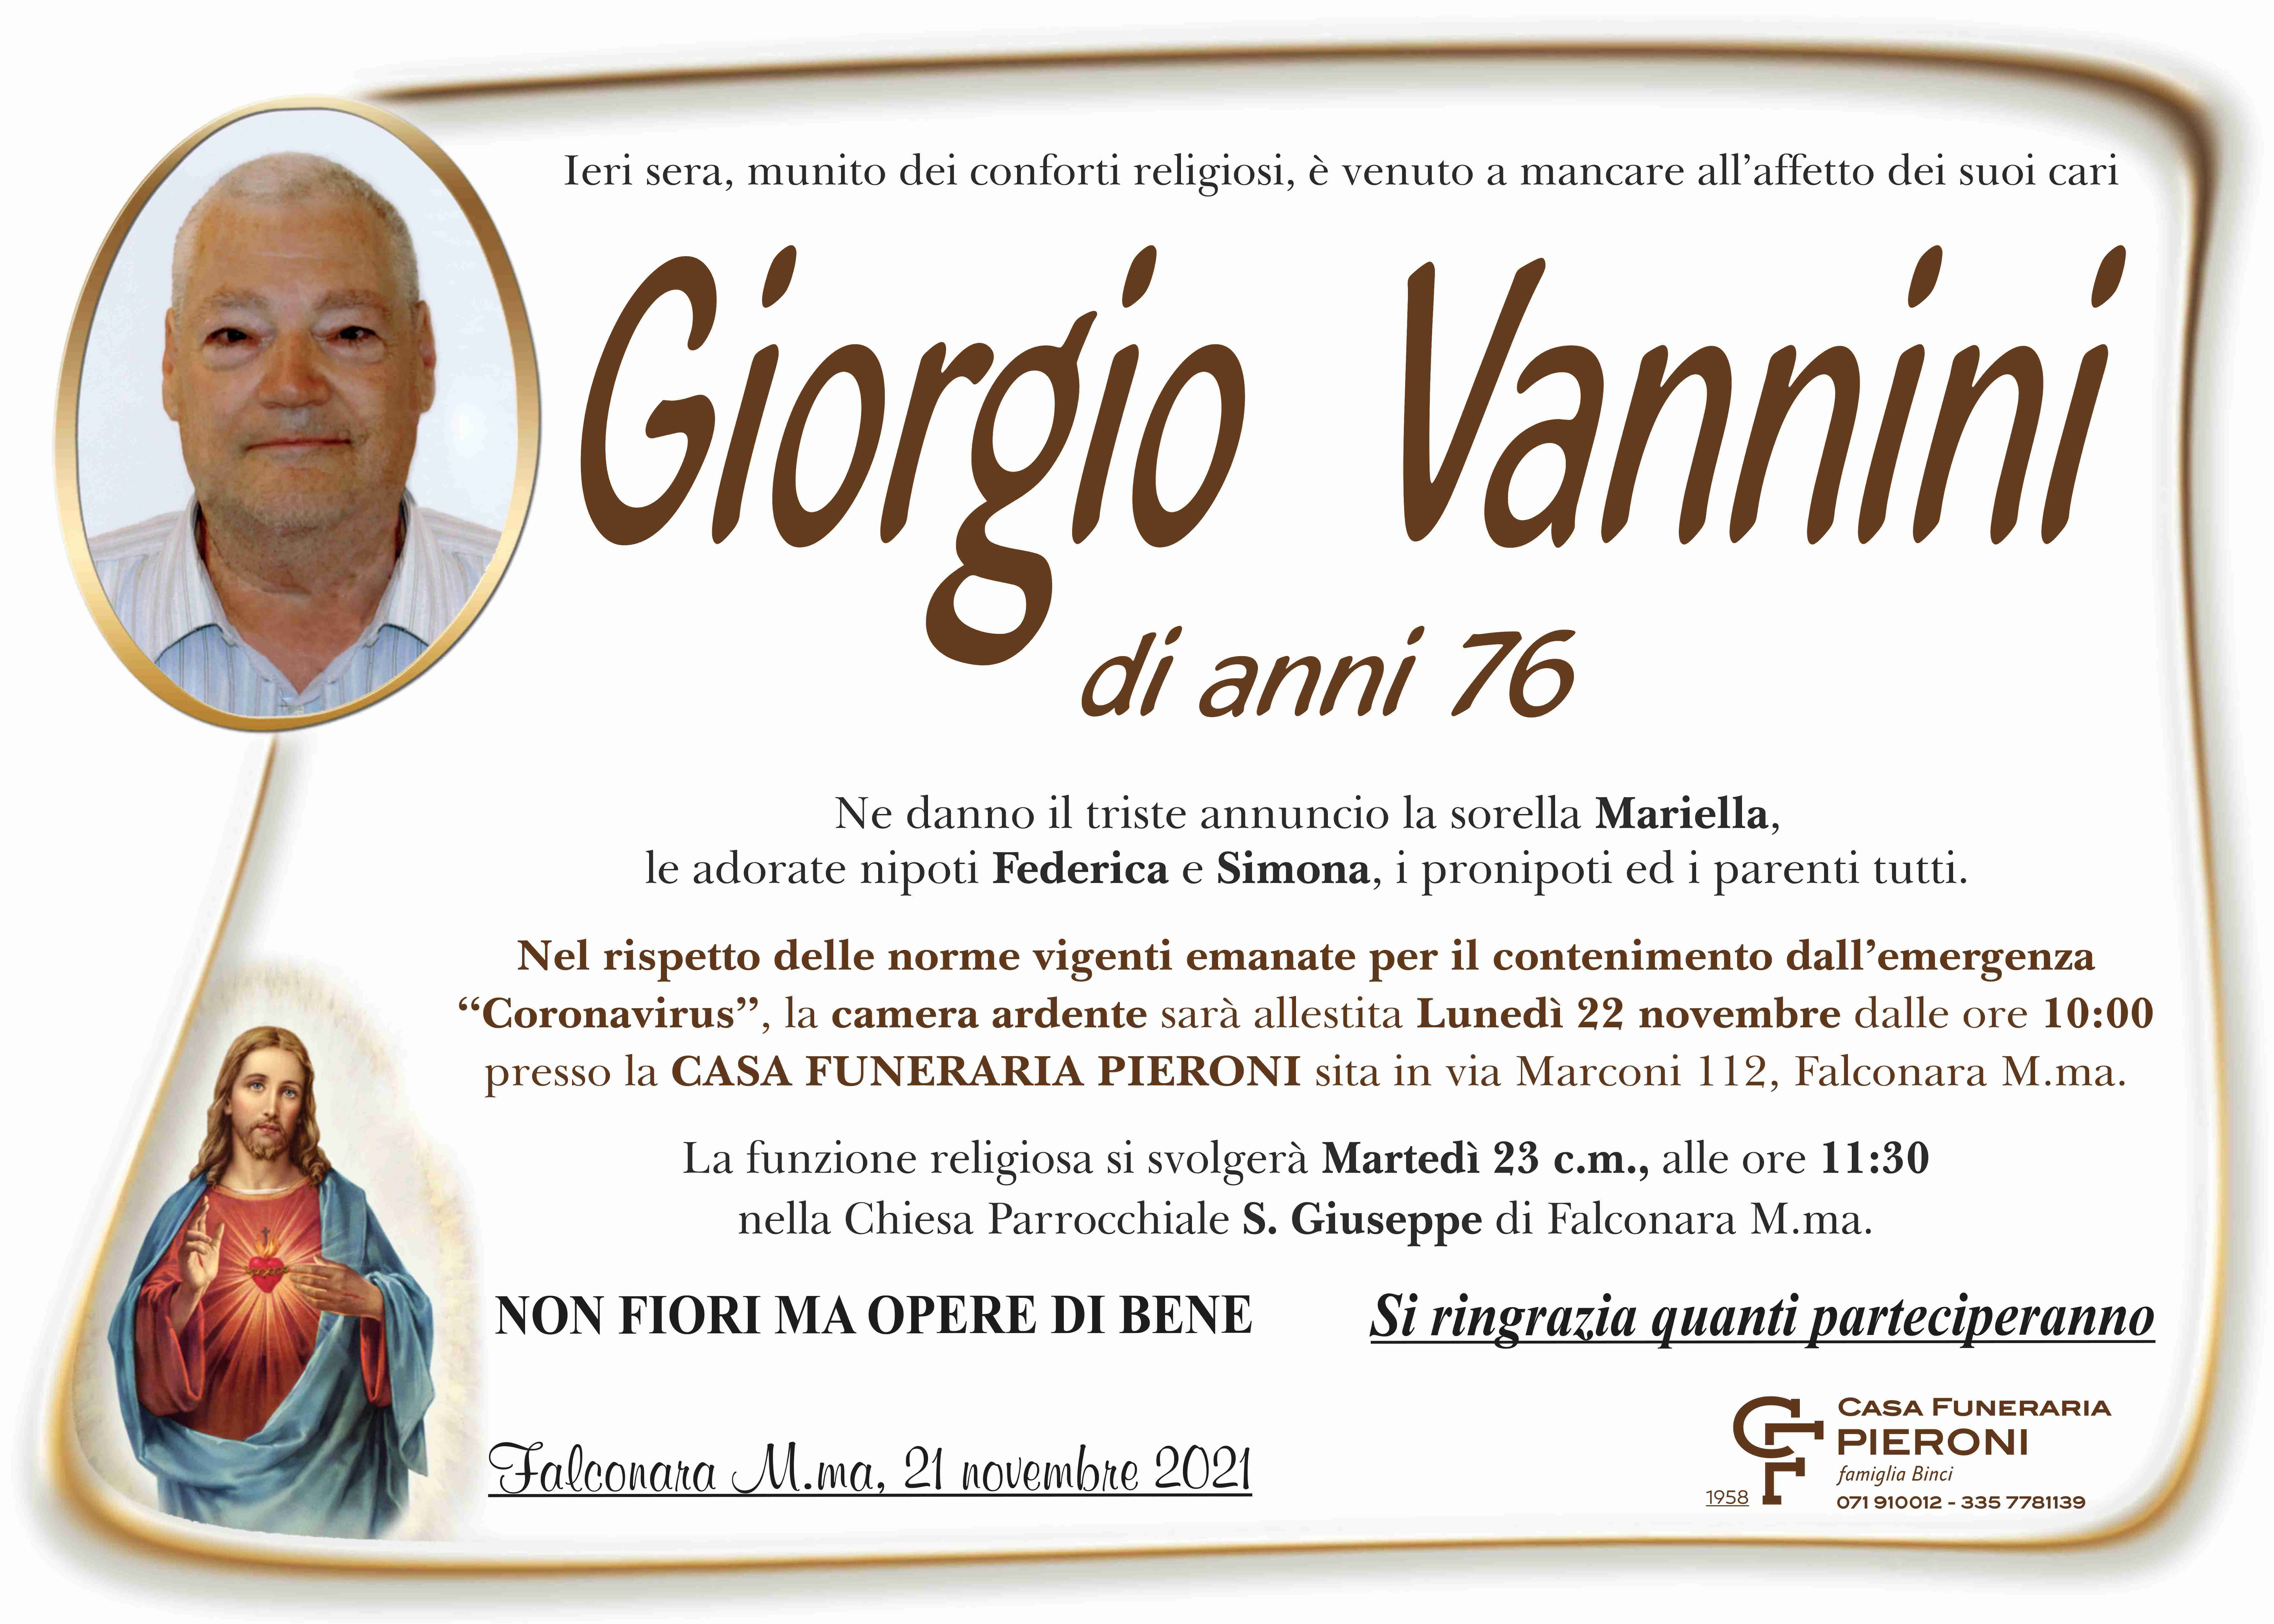 Giorgio Vannini